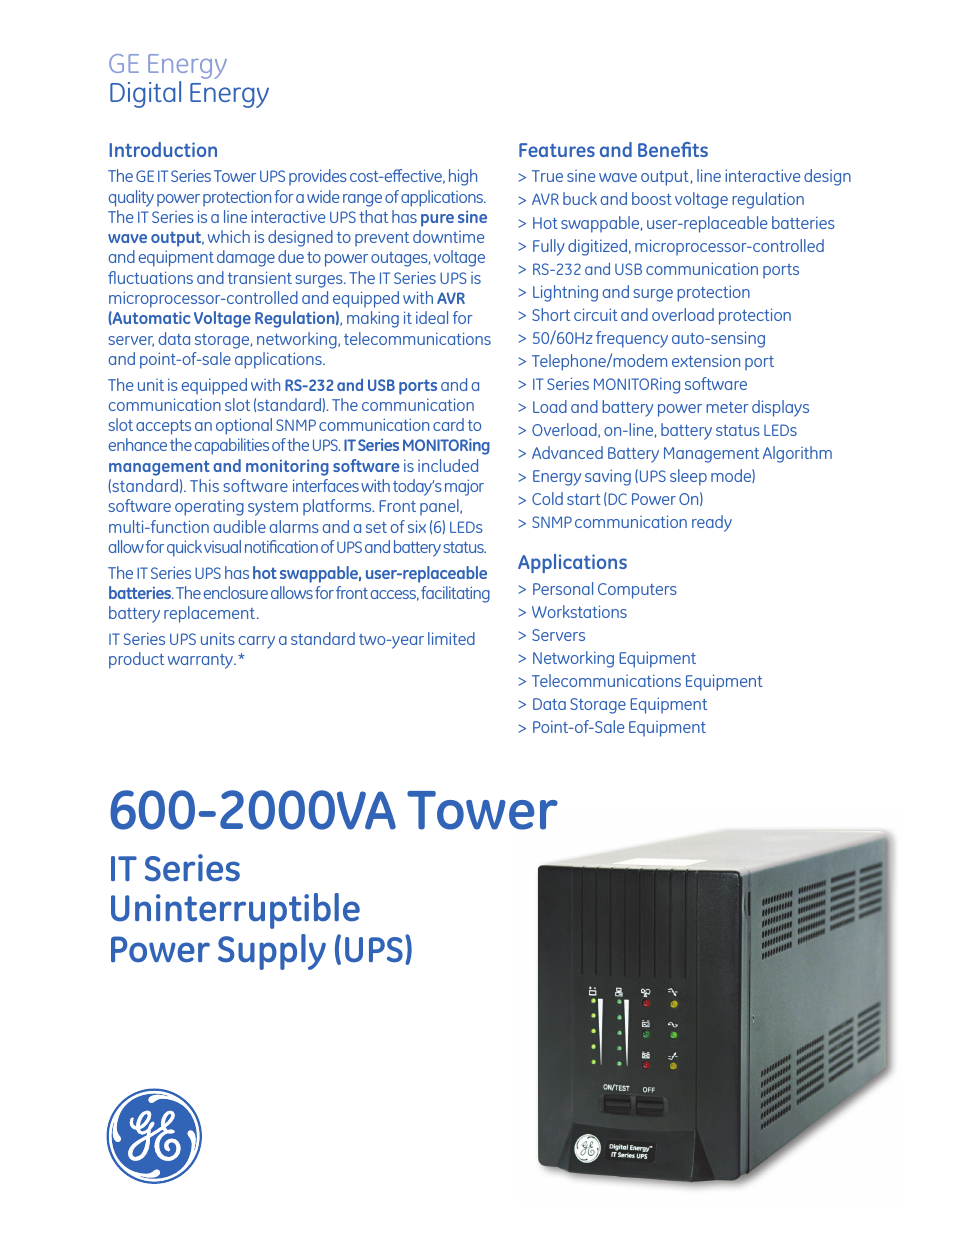 GE IT Series _ 600VA-2kVA tower